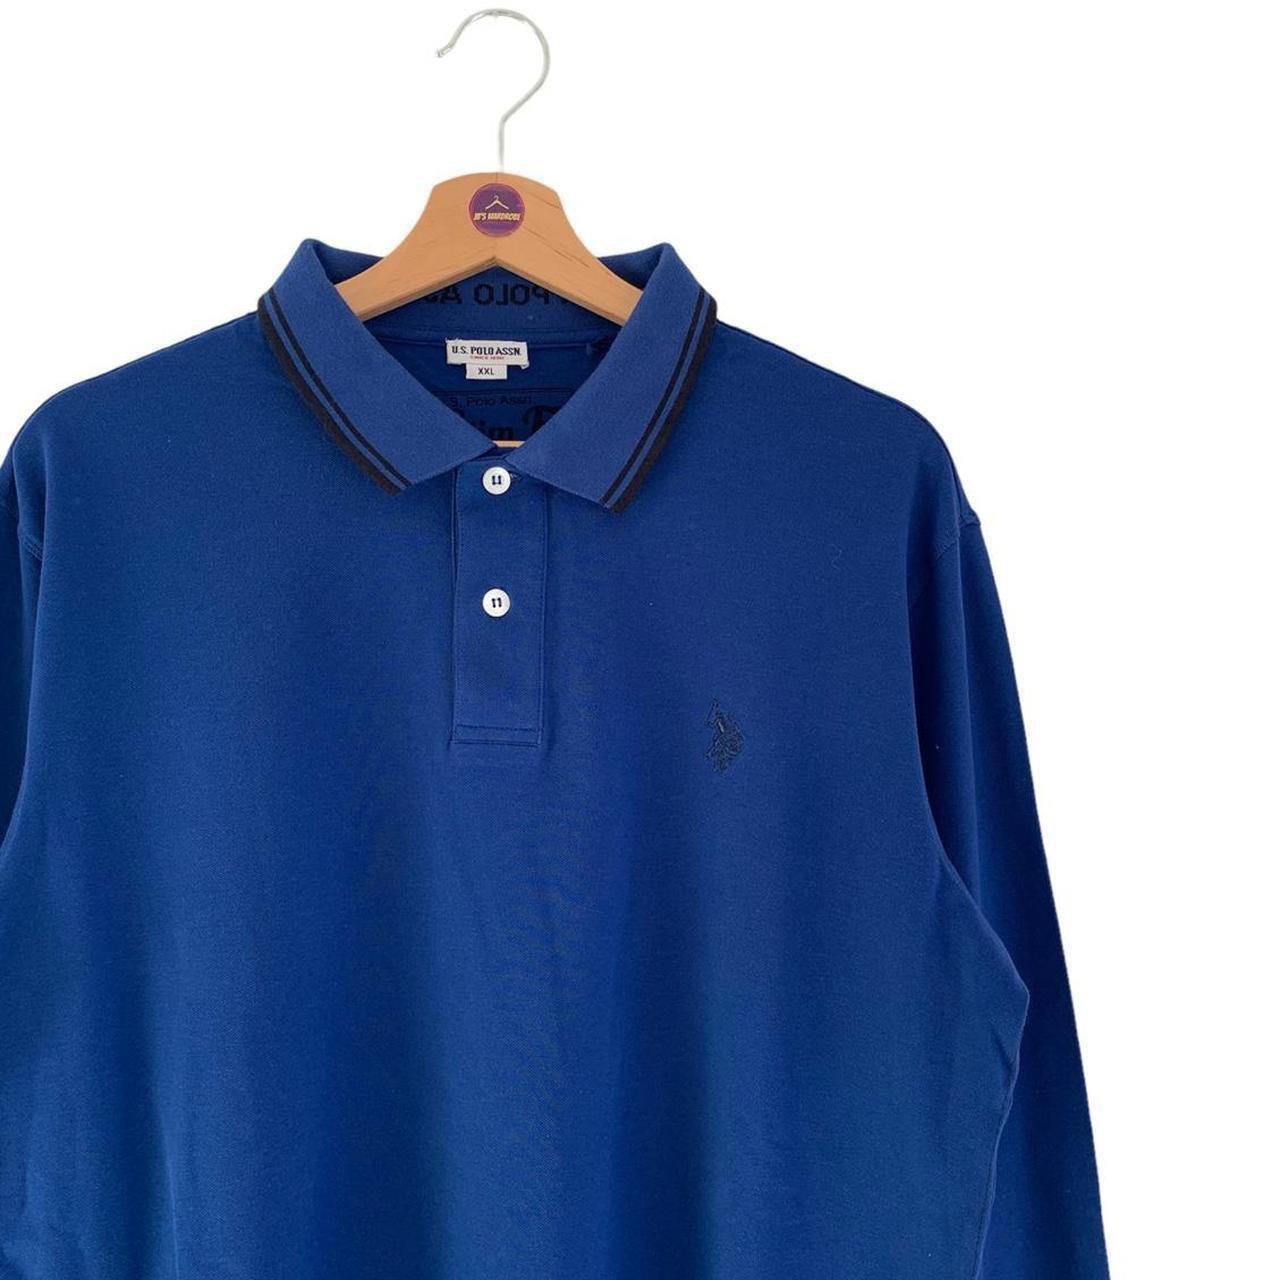 Blue Polo Shirt Royal blue U.S Polo Assn casual... - Depop